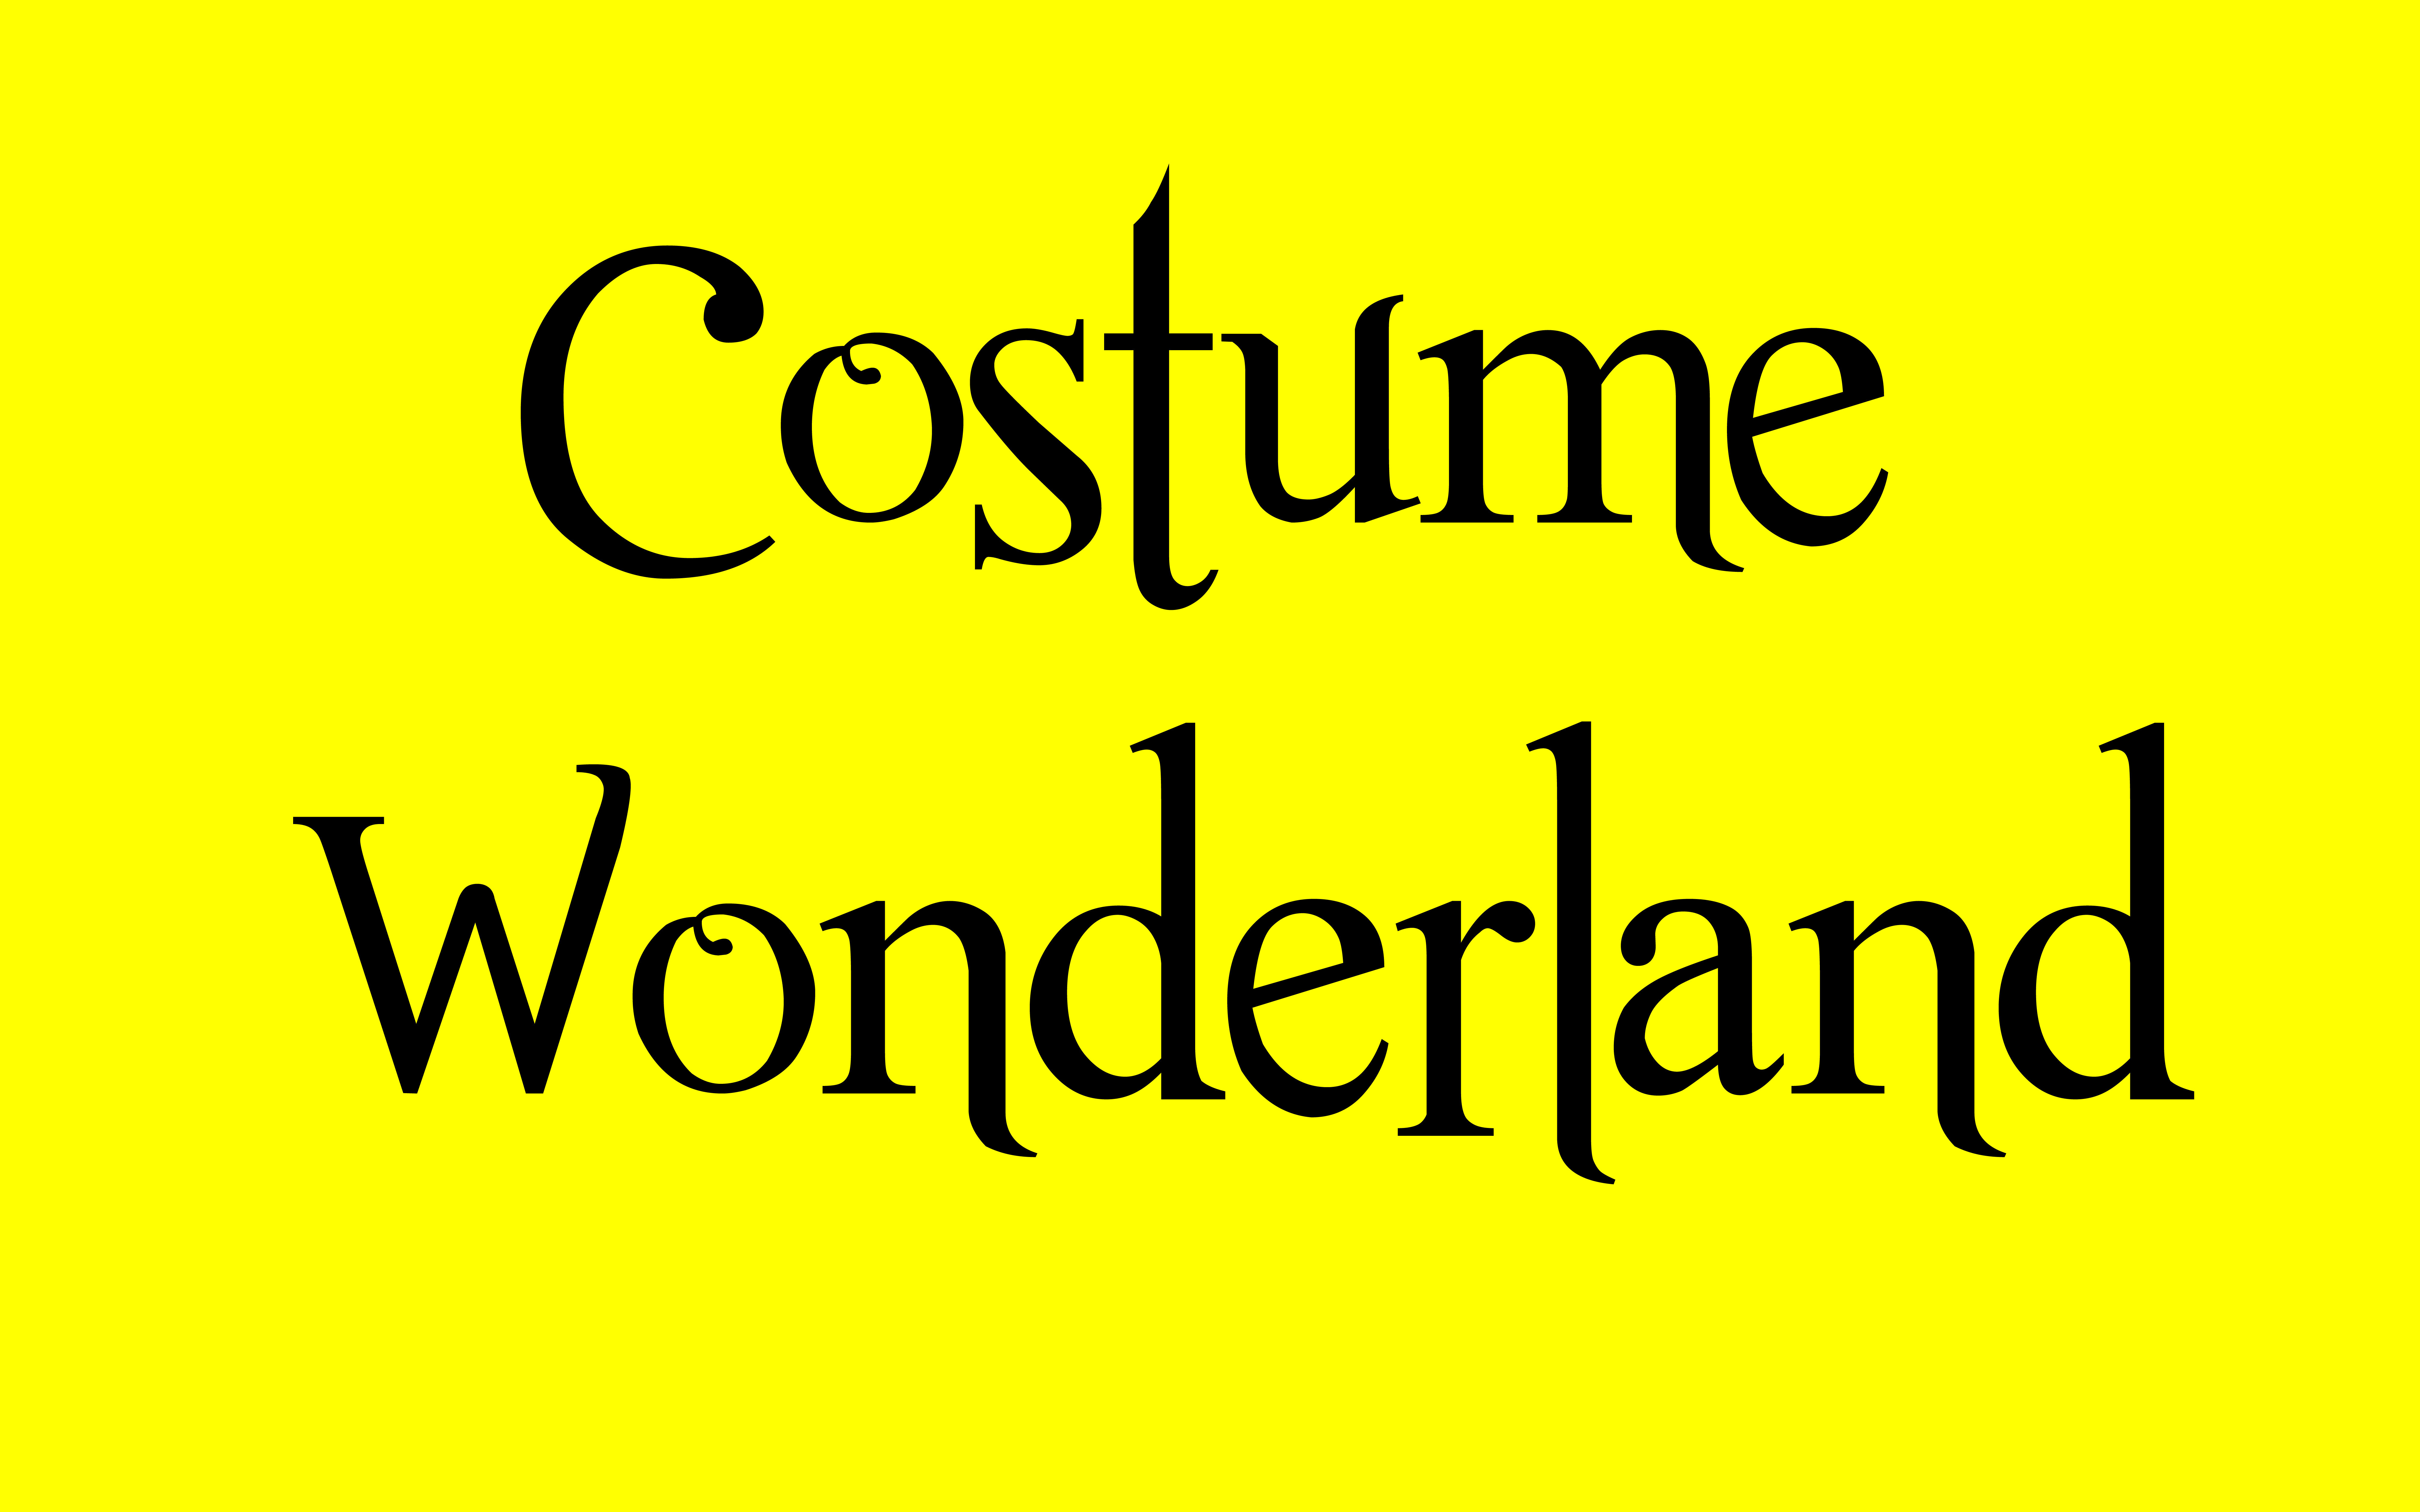 80s Aerobics Costume - Costume Wonderland